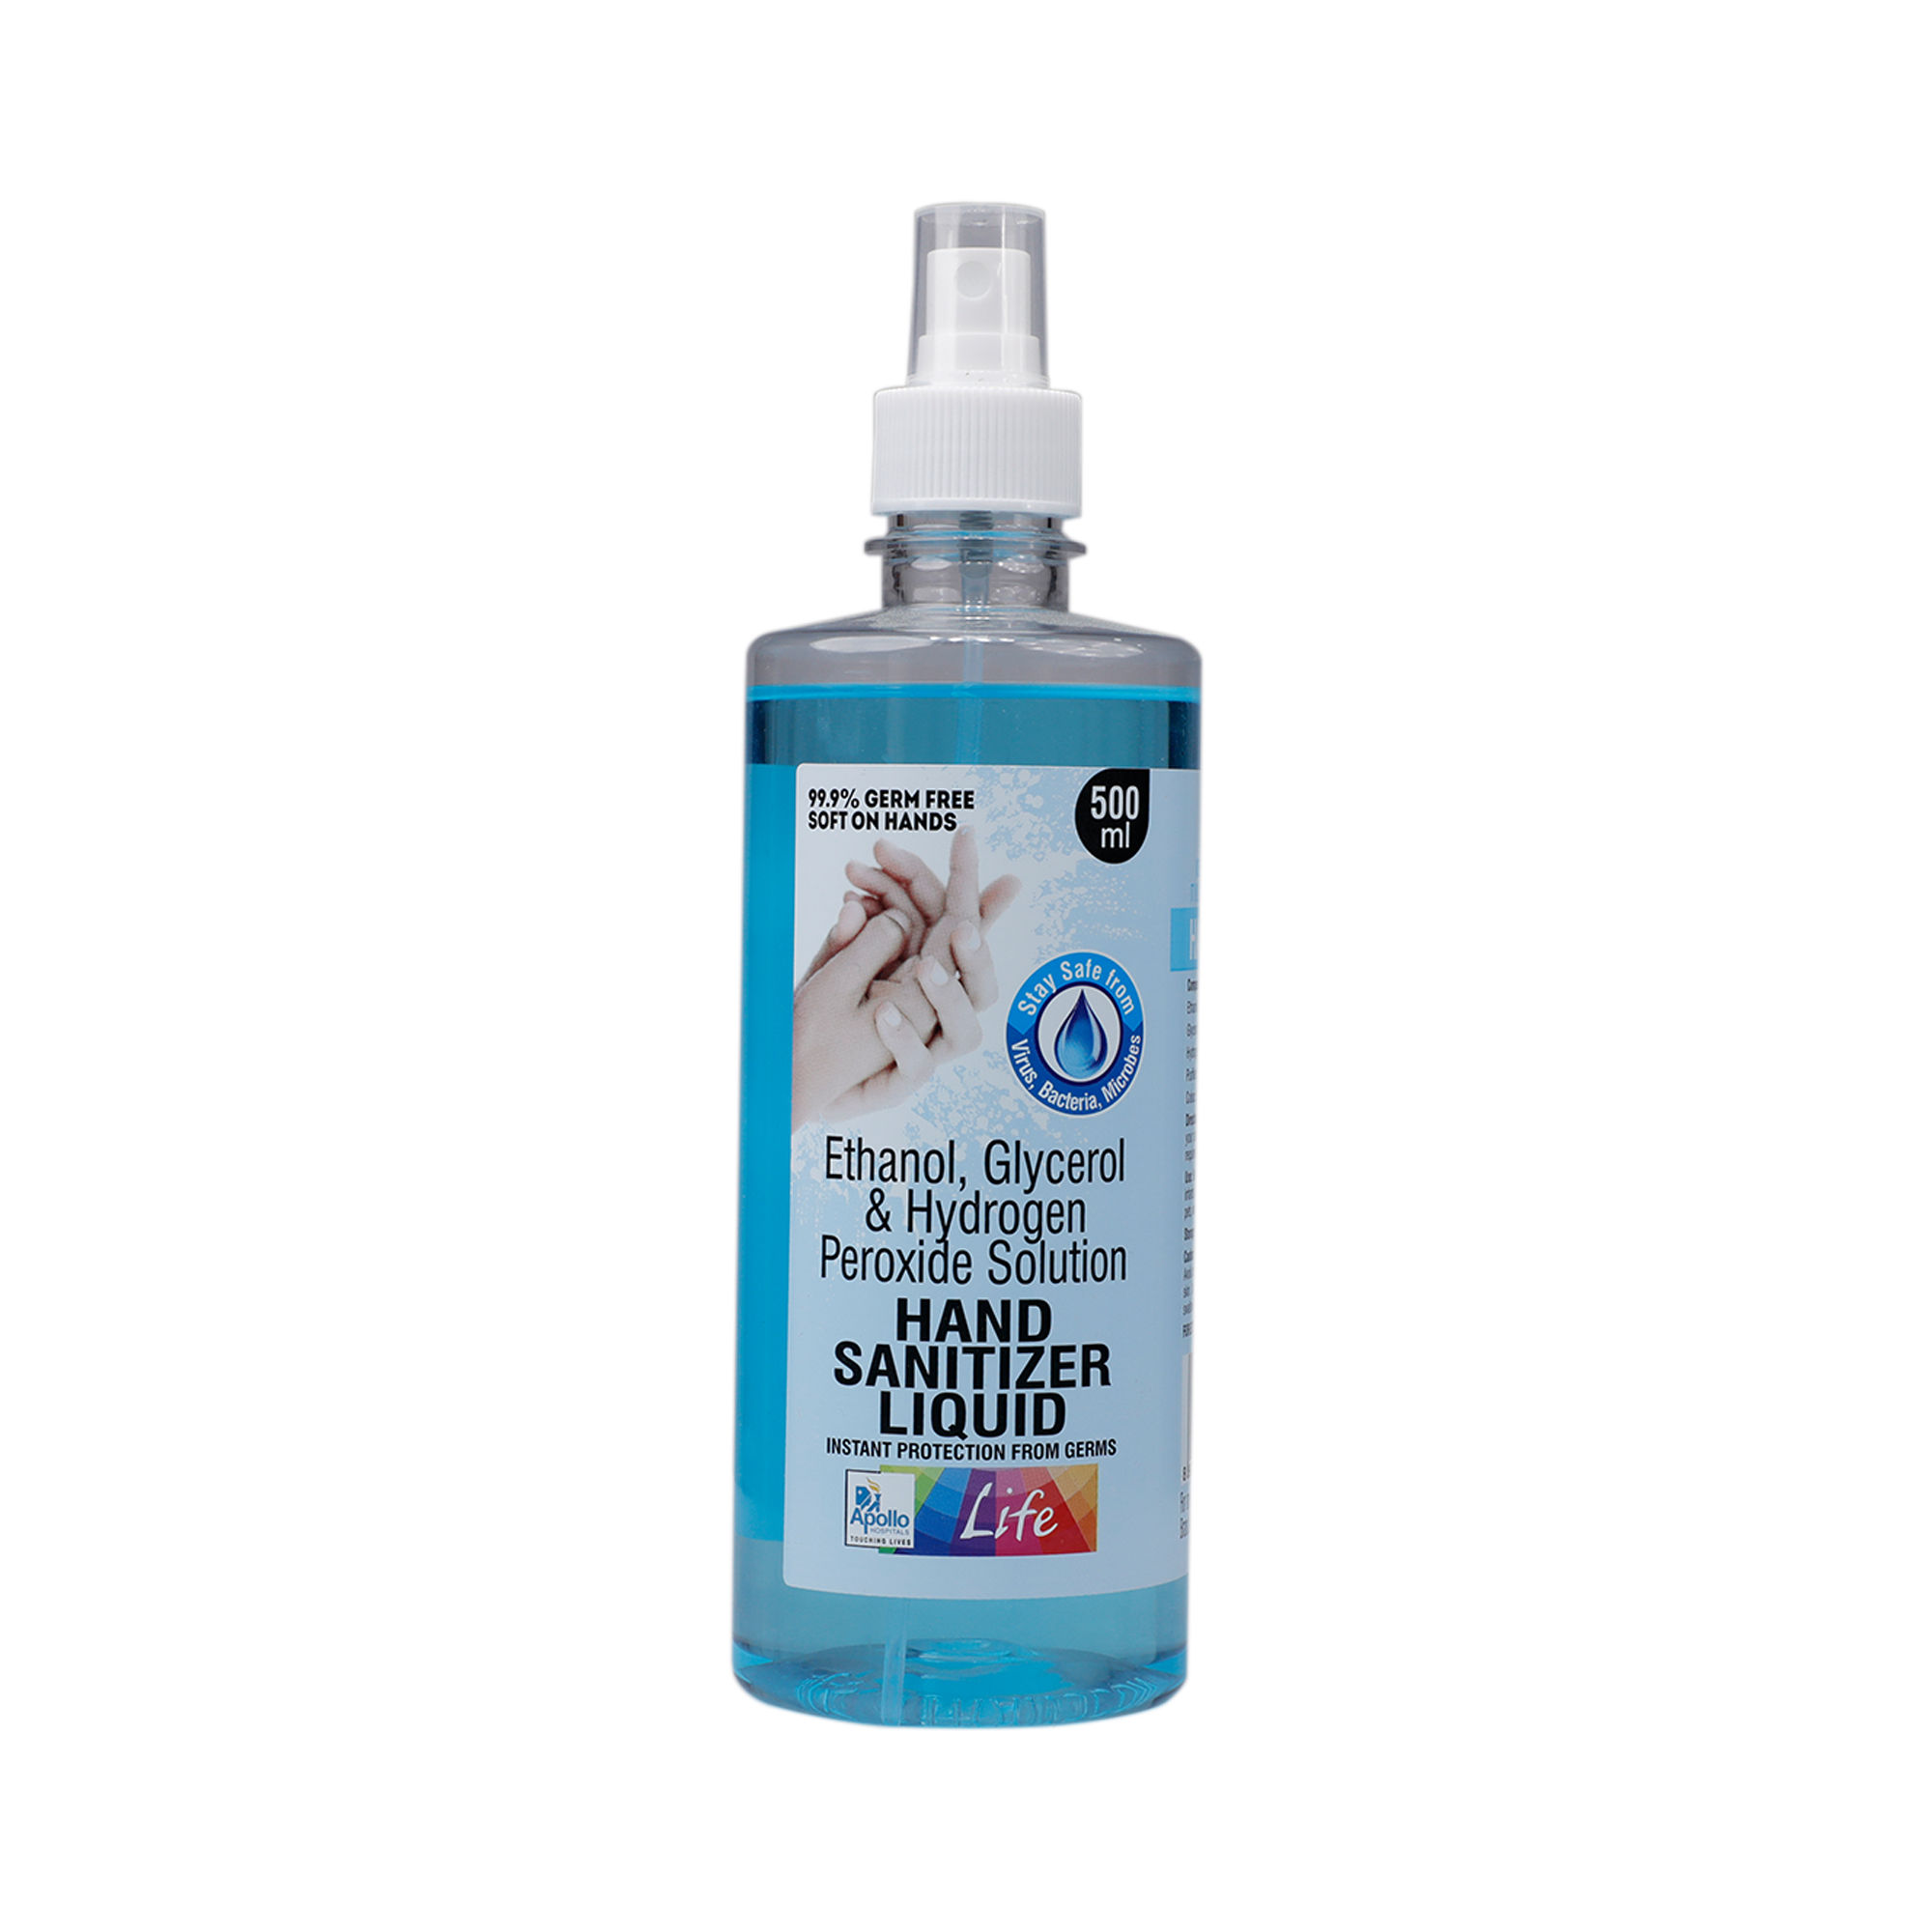 Apollo Life Hand Sanitizer Liquid Spray, 500 ml, Pack of 1 